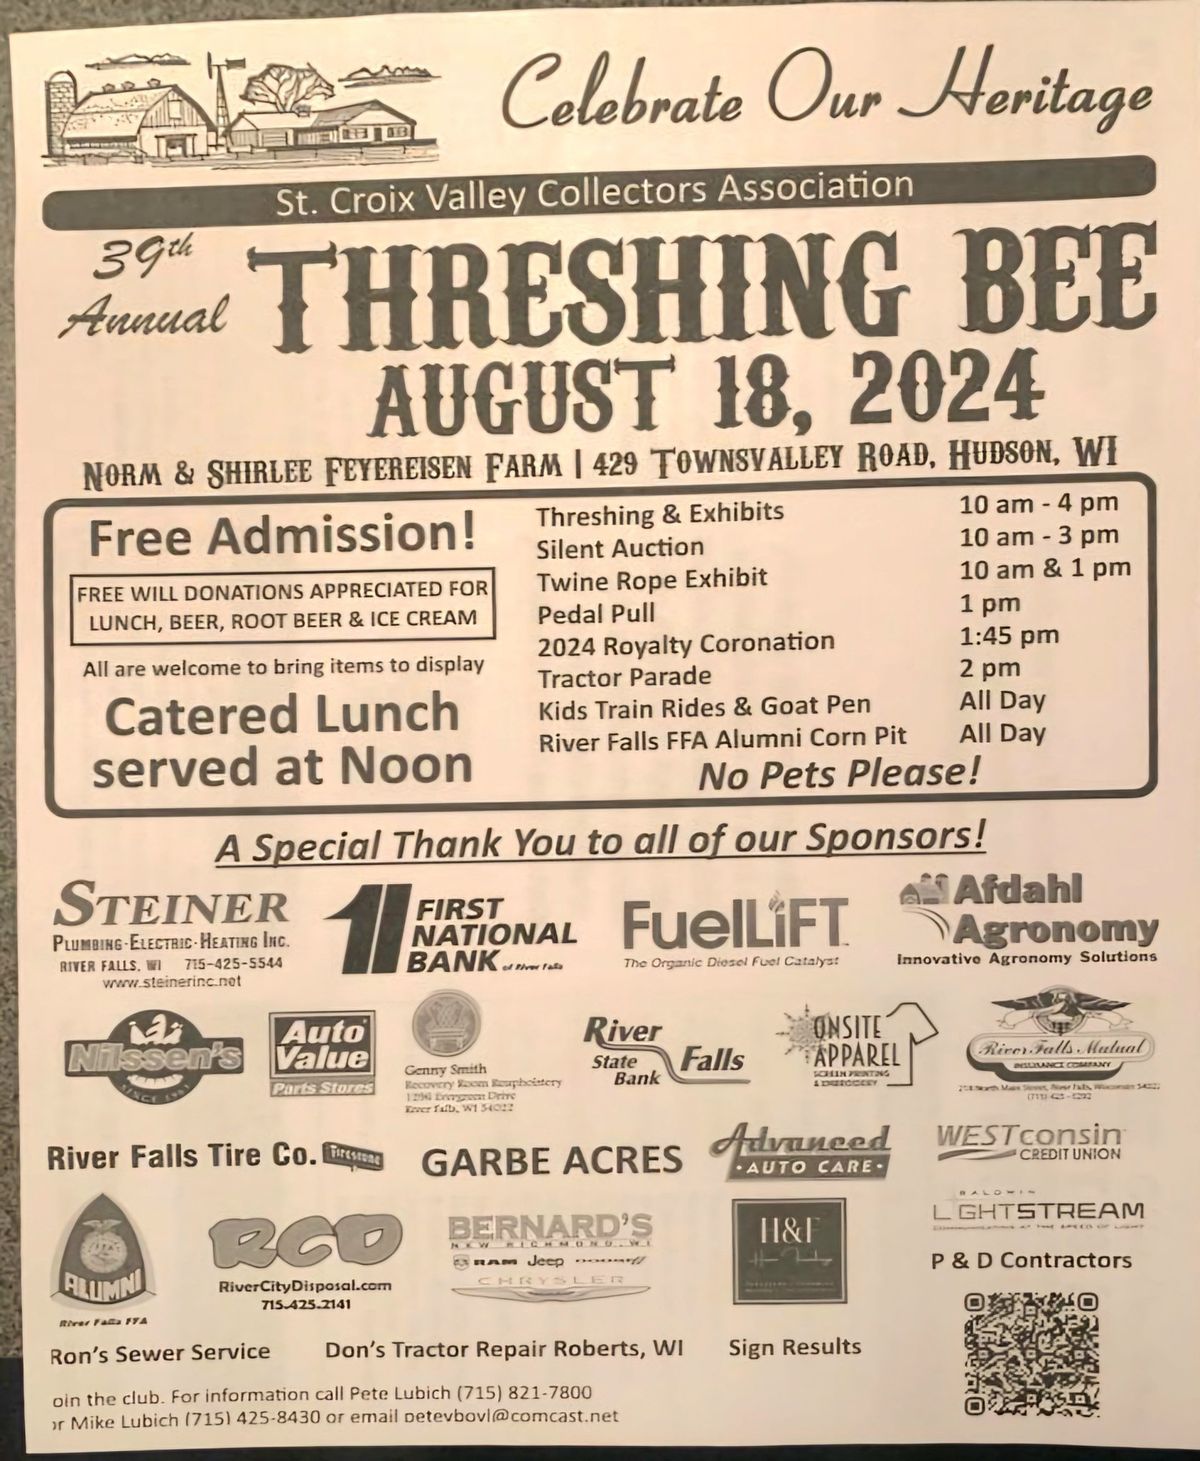 39th Annual Threshing Bee